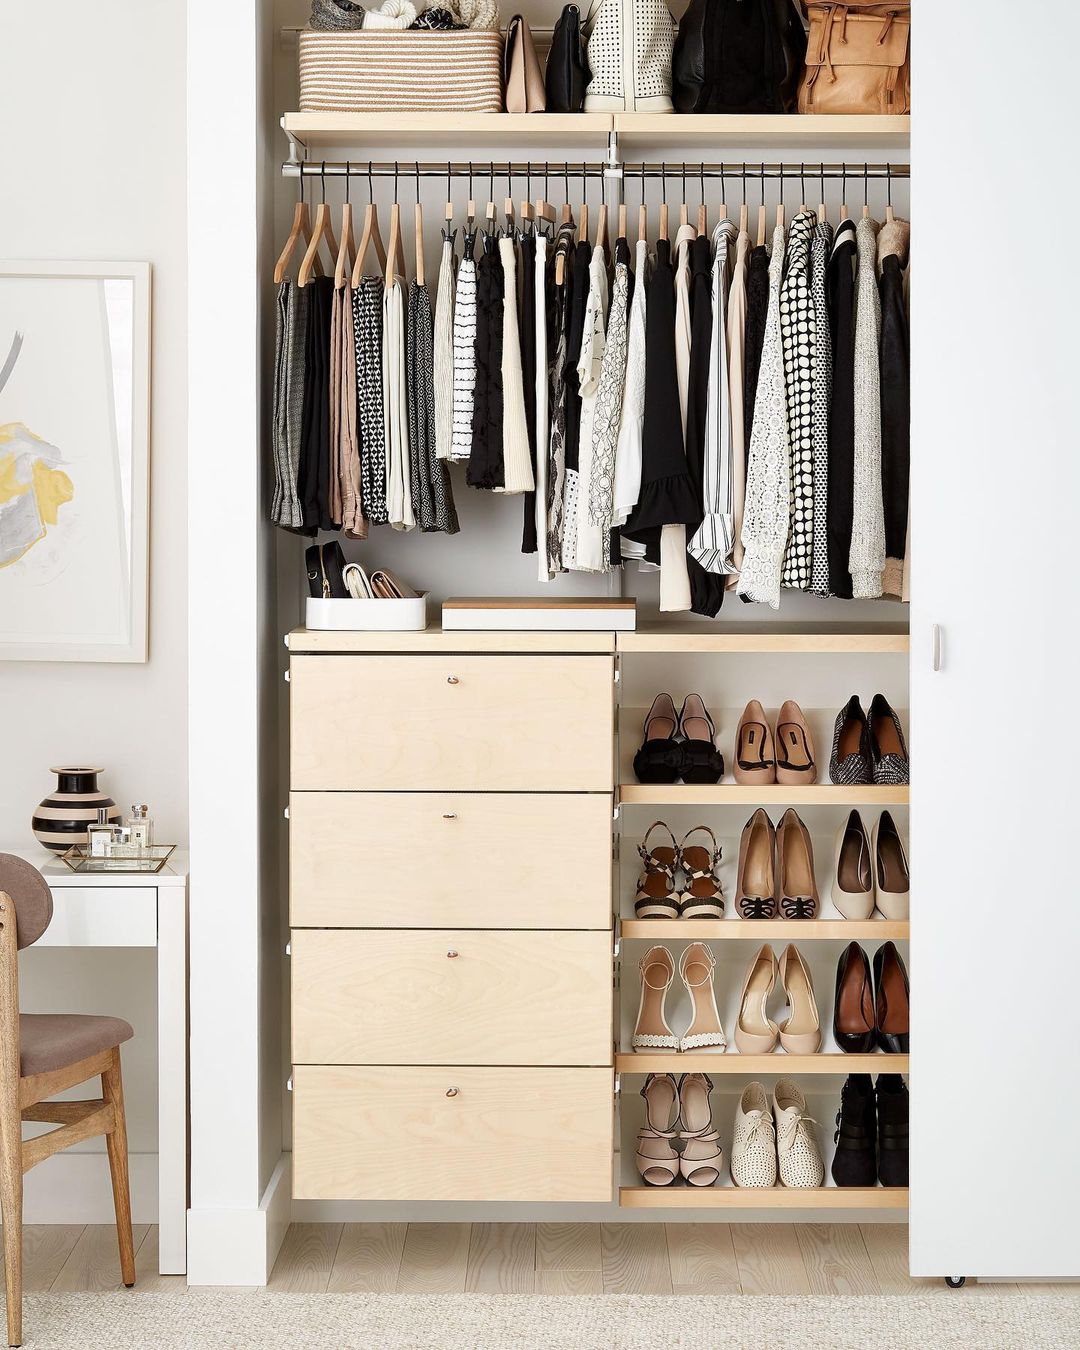 https://www.extraspace.com/blog/wp-content/uploads/2020/12/shoe-storage-ideas-overhaul-your-closet.jpg